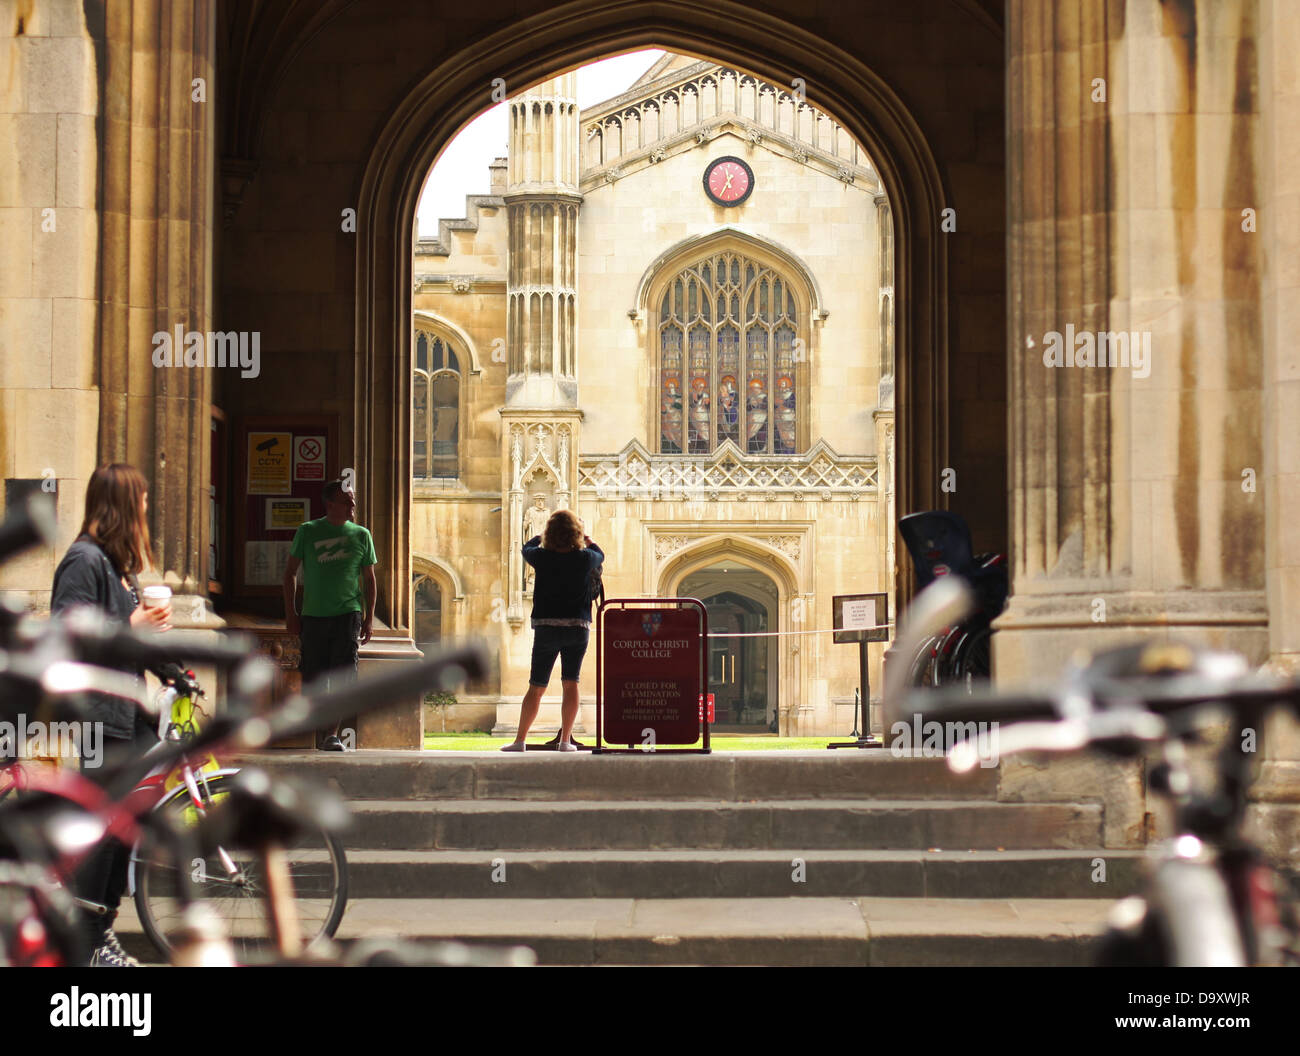 A tourist takes a photograph of Corpus Christi College in Cambridge. Stock Photo